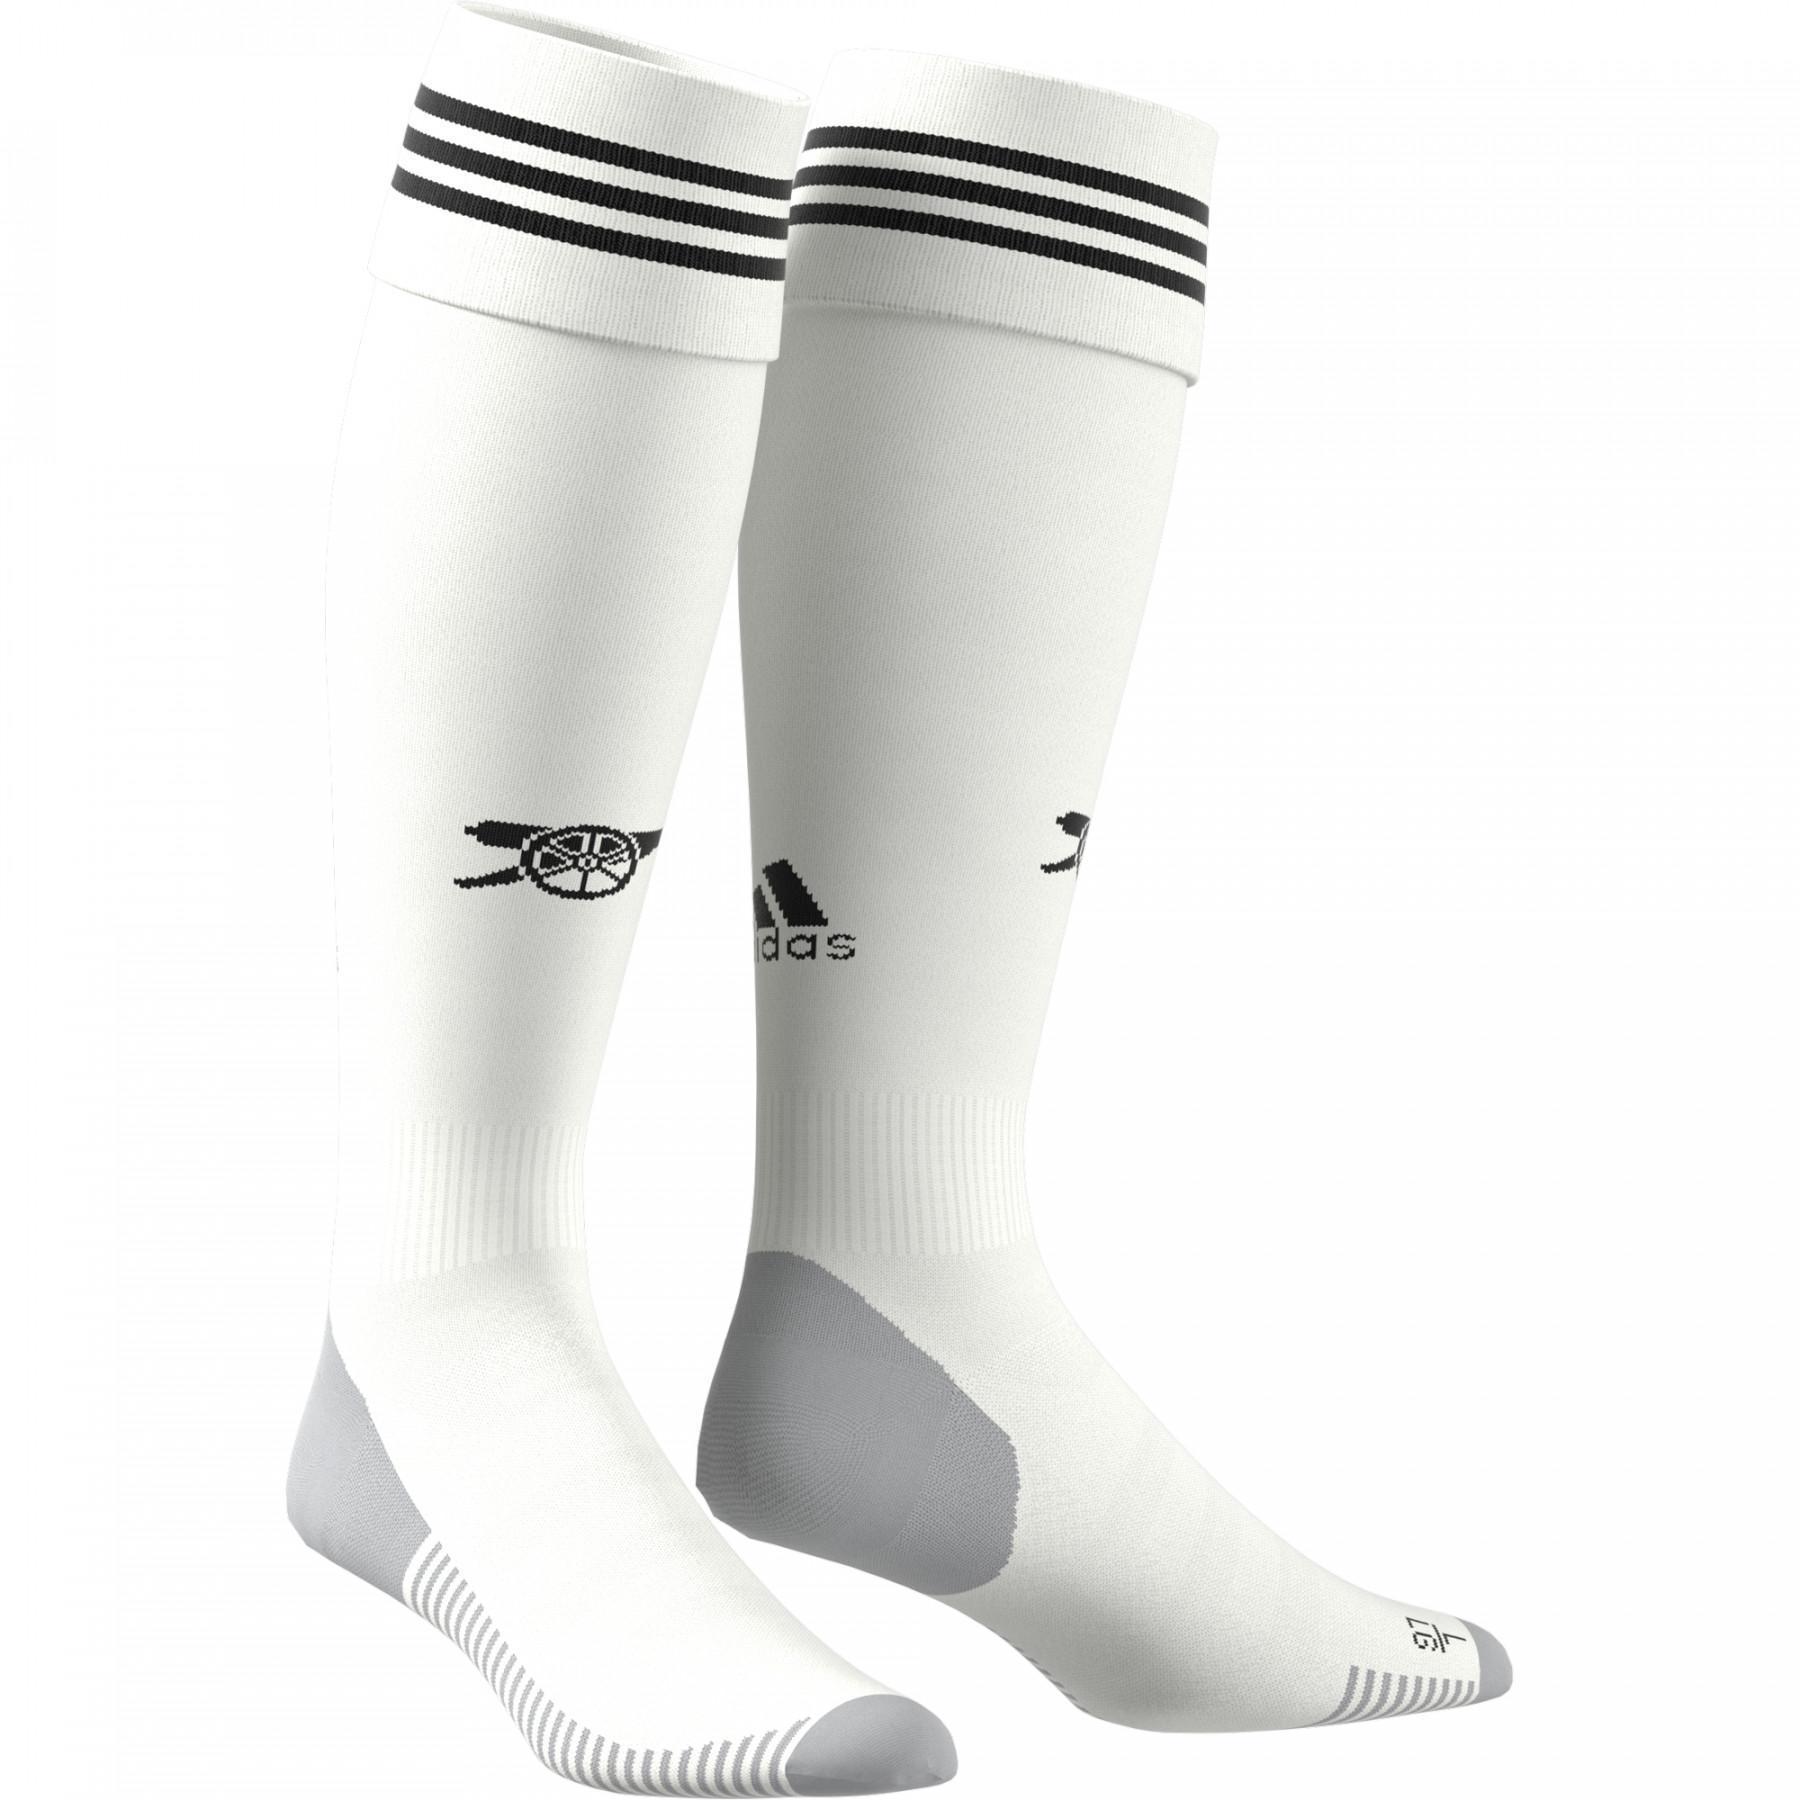 Outdoor socks Arsenal 2020/21 - adidas - Brands - Equipments